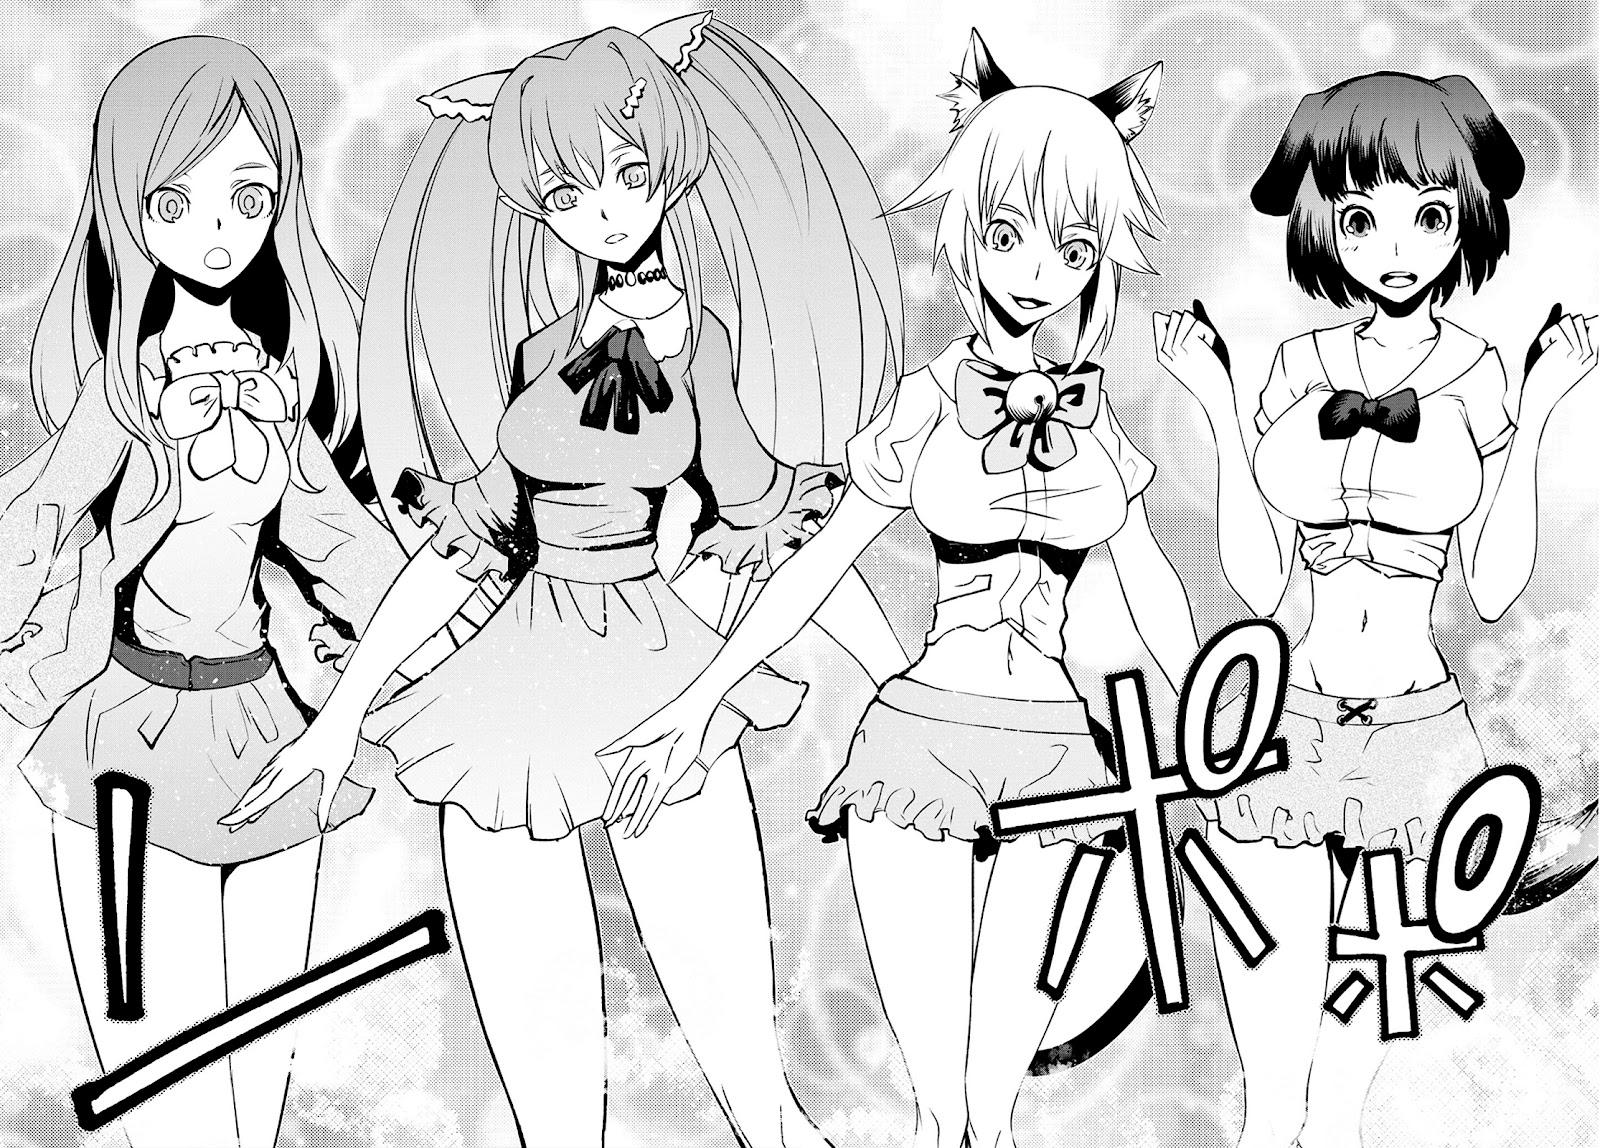 Comic Dragon Age: Death March Kara Hajimaru Isekai Kyousoukyoku / Death March To The Parallel World Rhapsody Manga 91